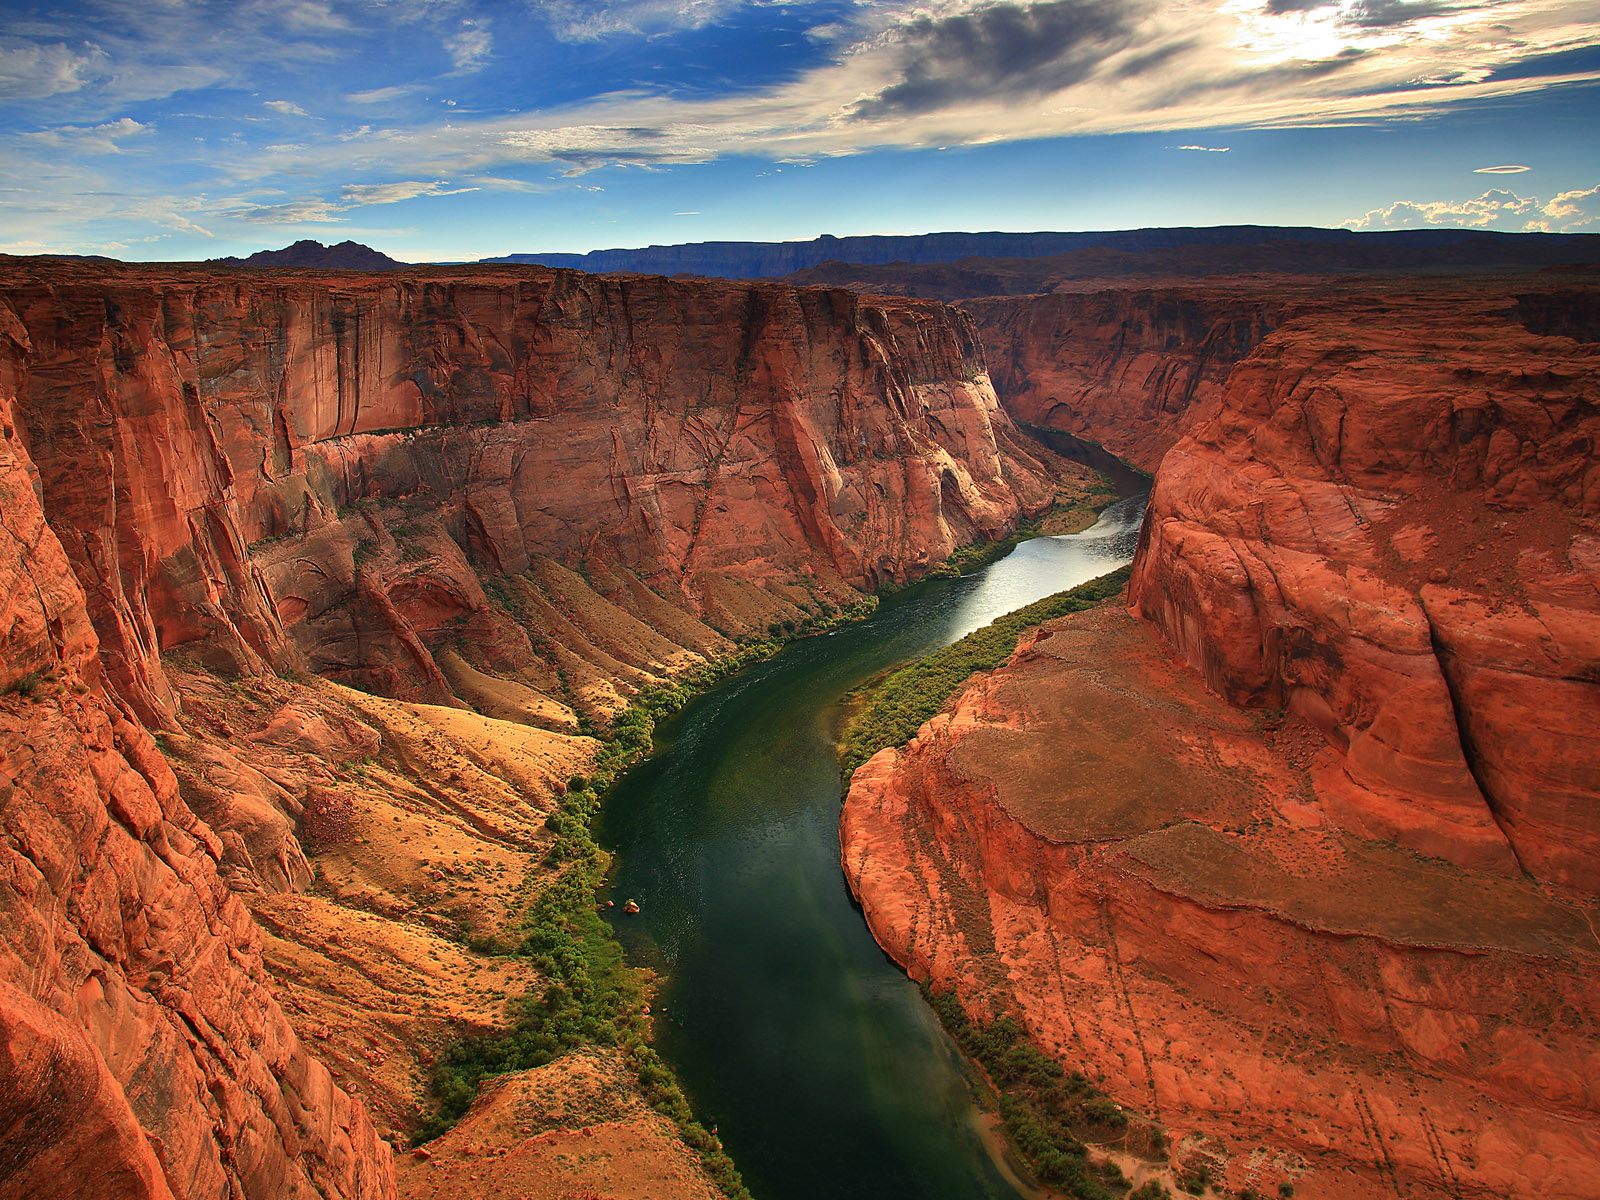  Colorado River Page Arizona   Arizona Photography Desktop Wallpapers 1600x1200